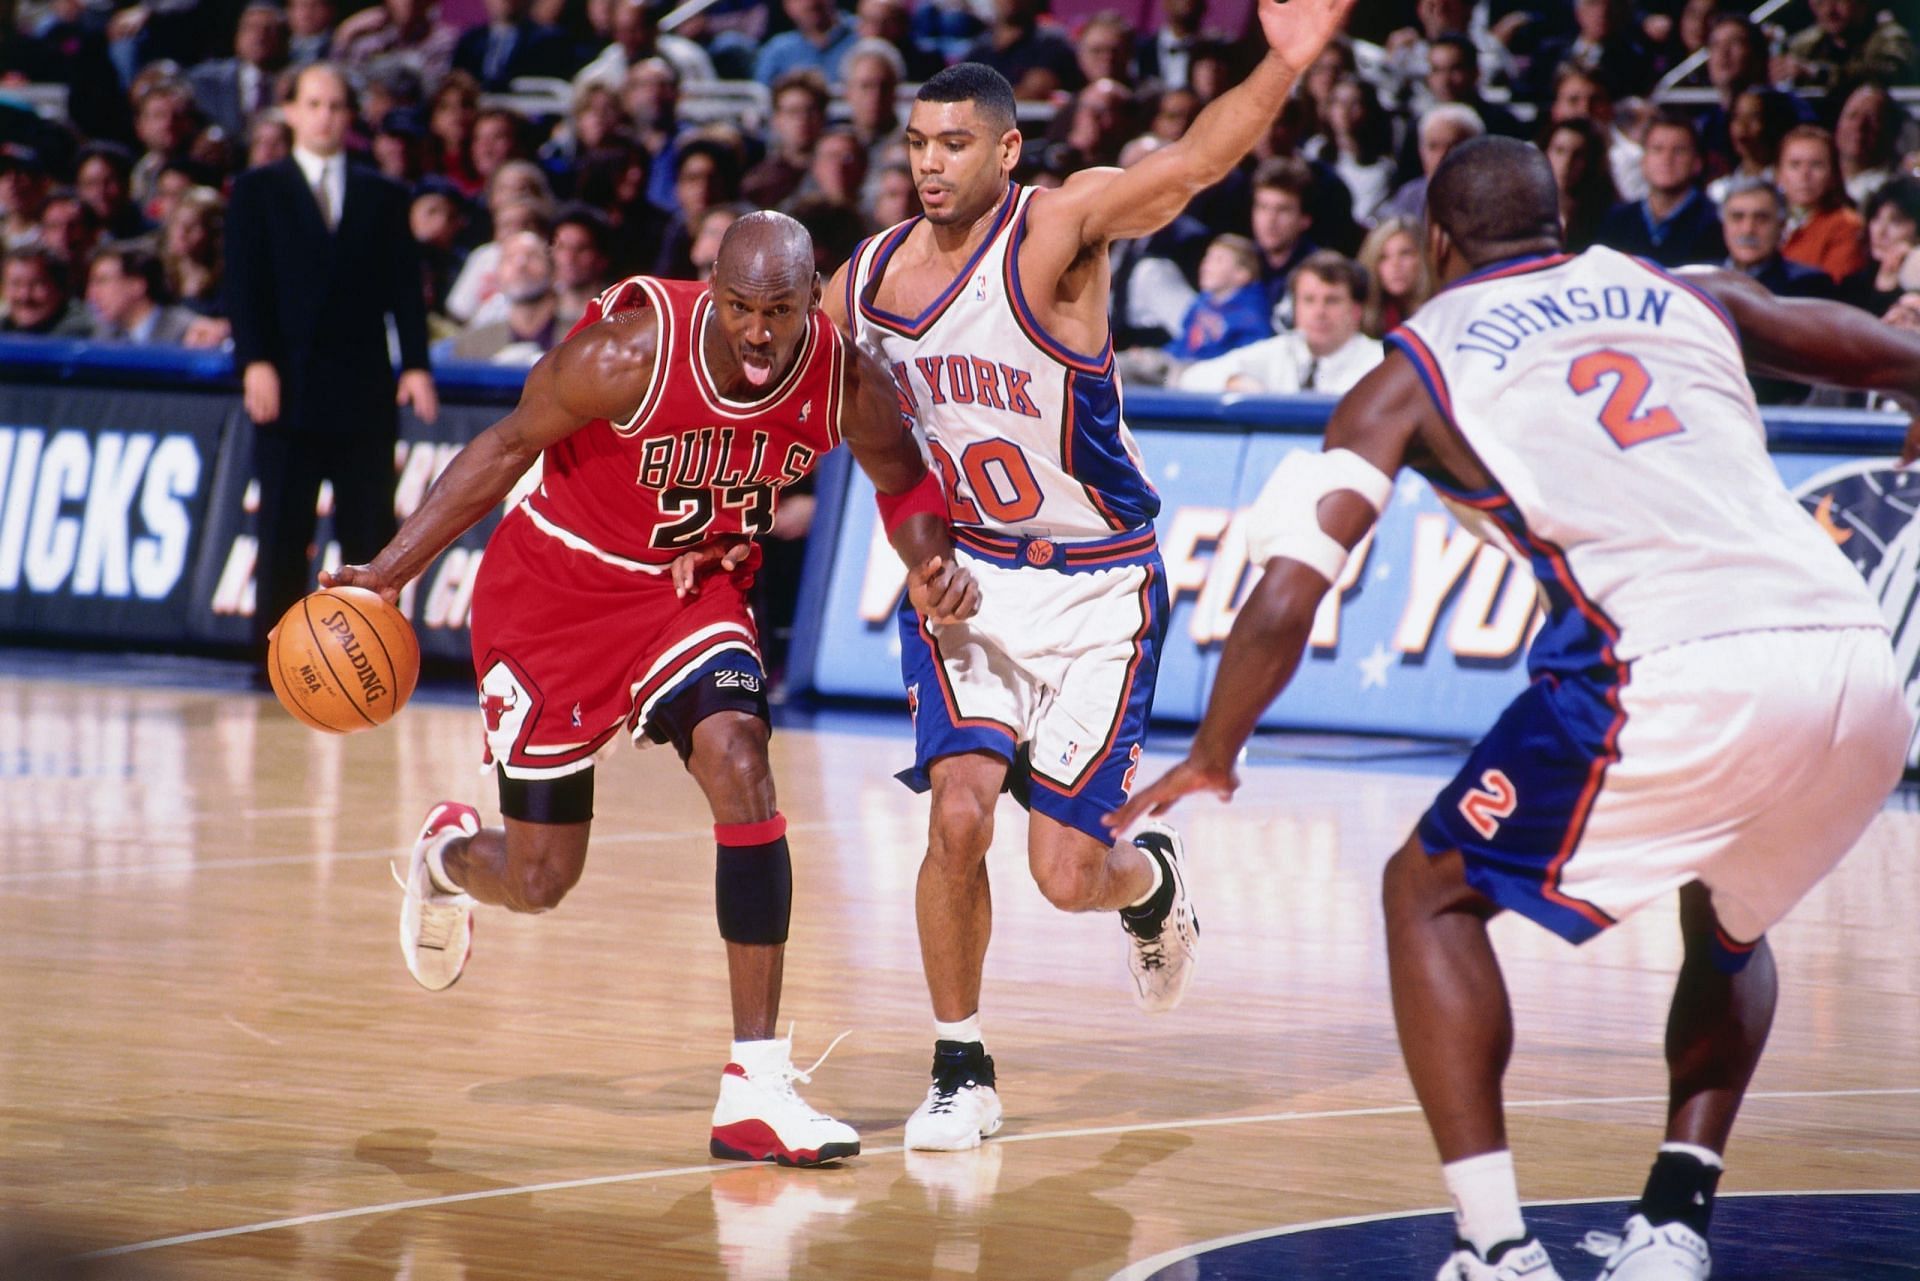 Michael Jordan against Allan Houston and the New York Knicks